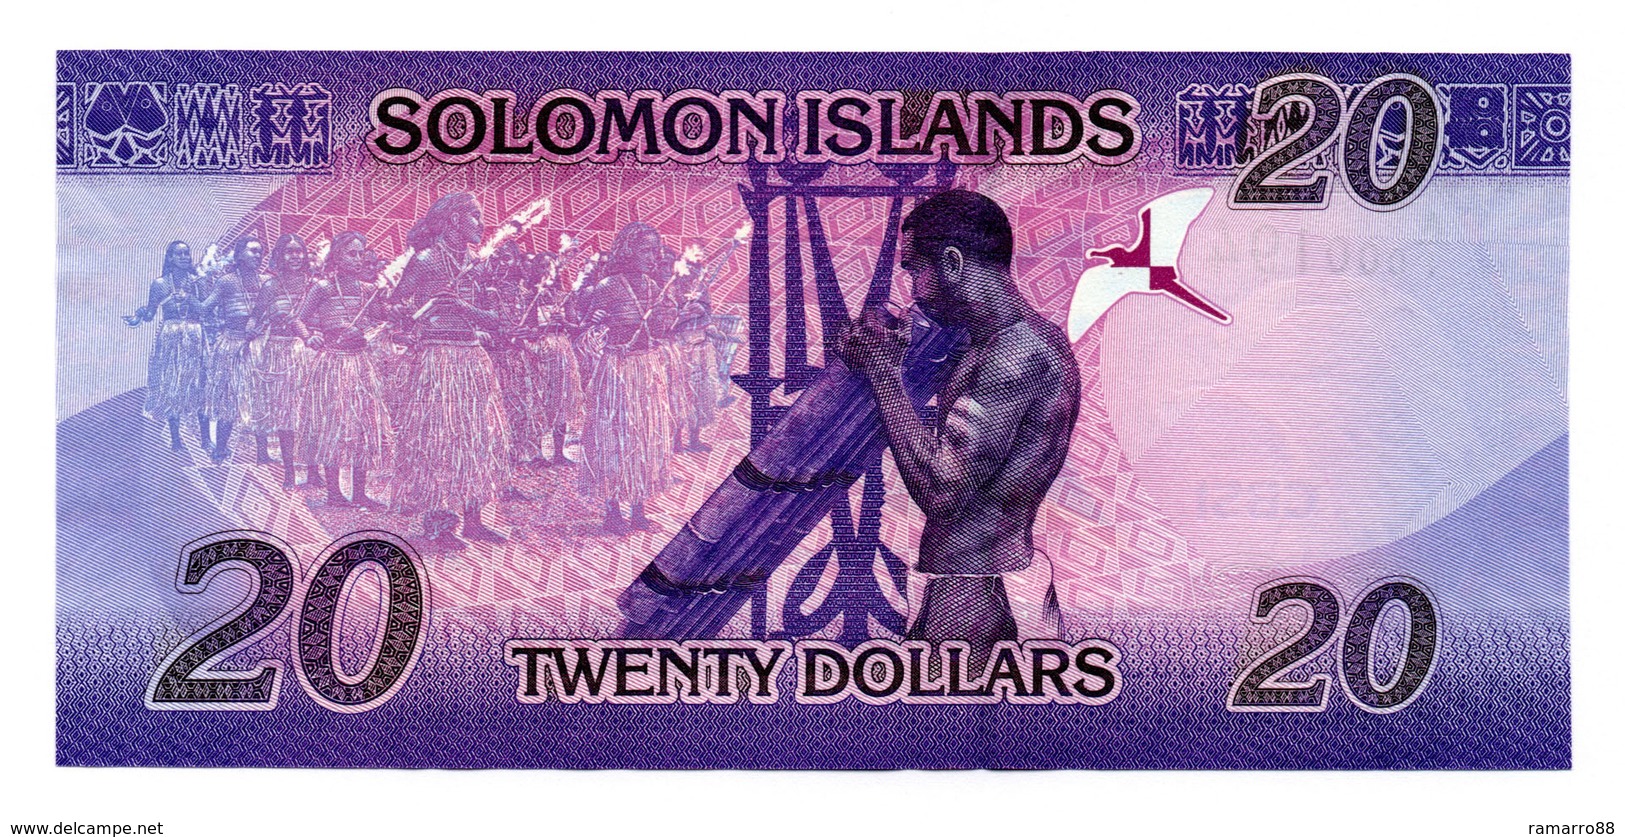 Solomon Islands 20 Dollars 2017 Pick # 34 Very Low Serial # A/1 000194 Unc - Isola Salomon